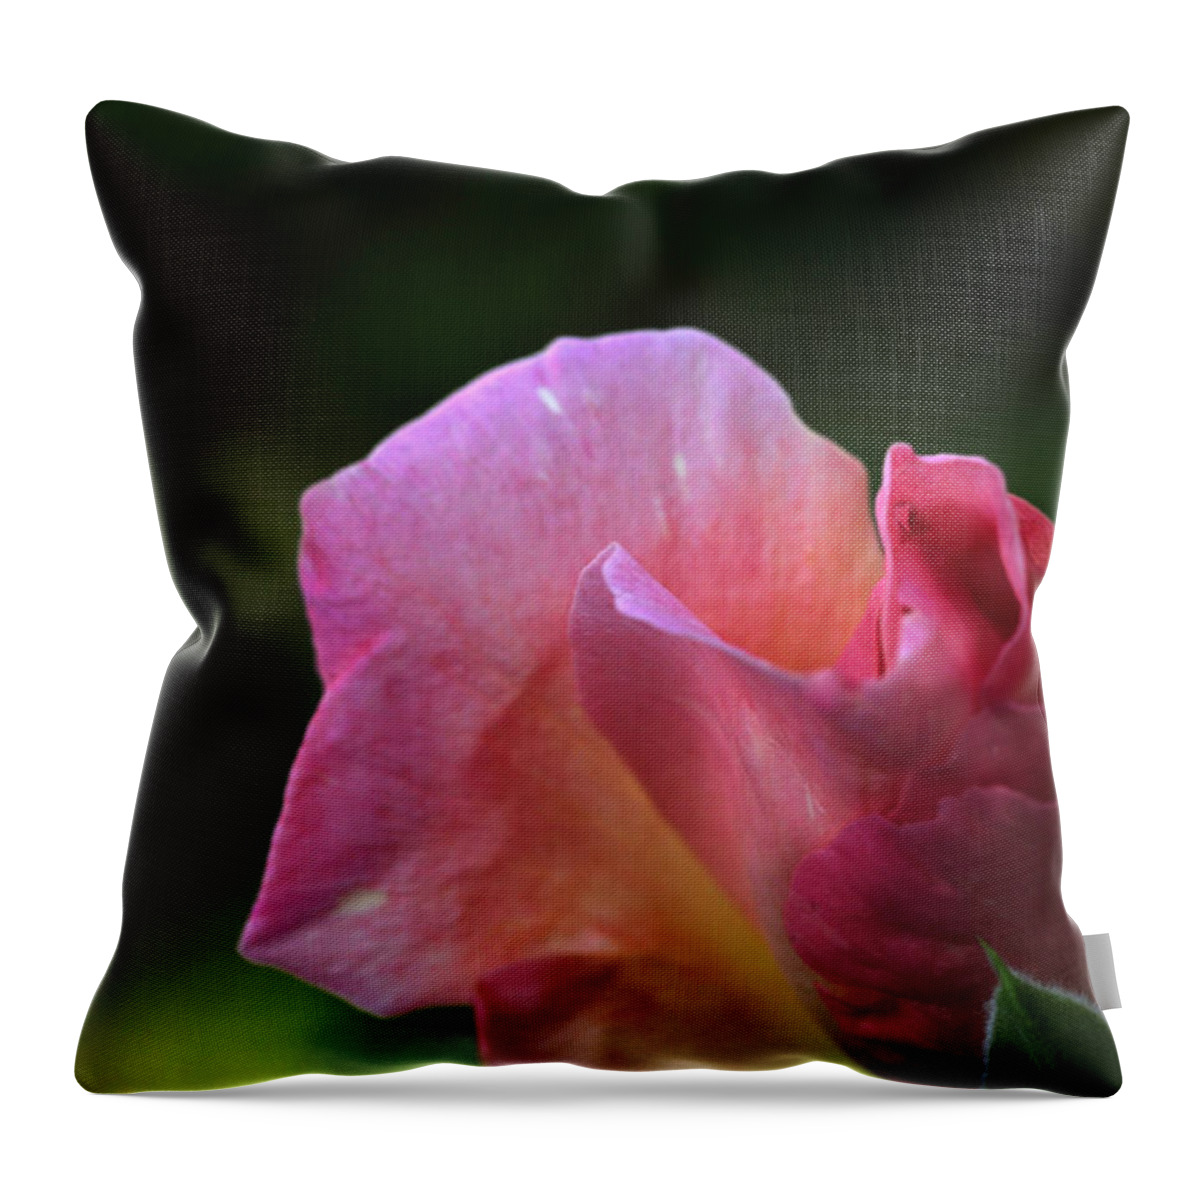 Rose Throw Pillow featuring the photograph Spreading Petals by Wanda Brandon